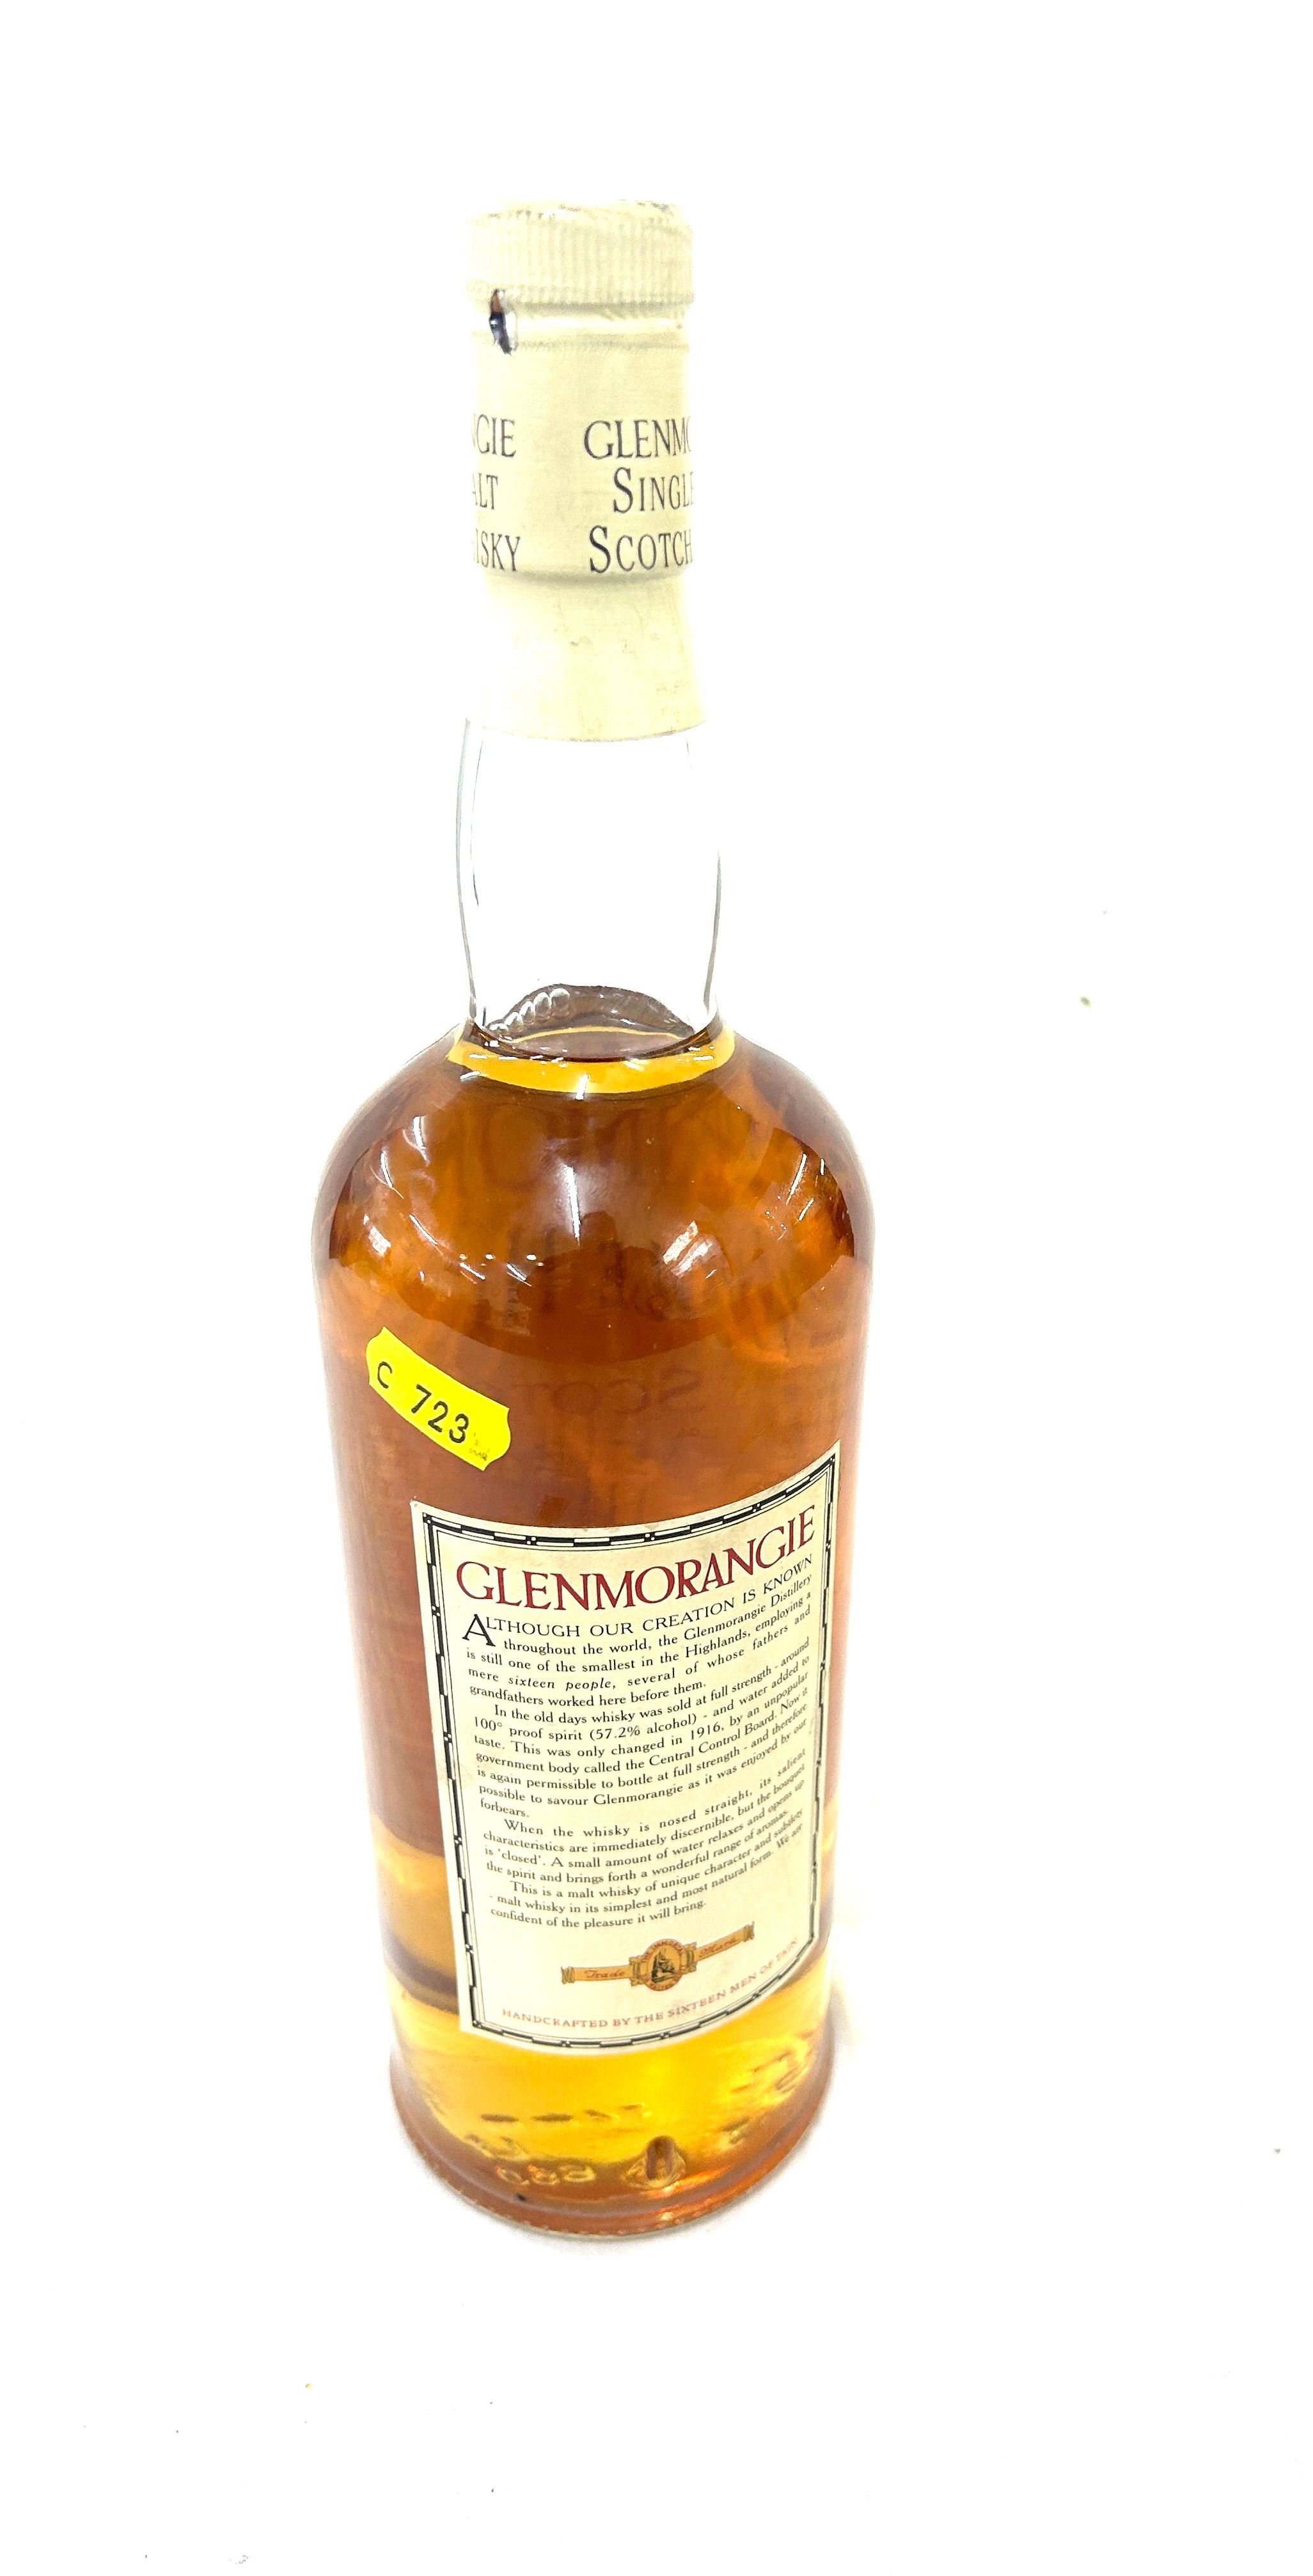 Bottle of Glenmorangie single malt scotch whisky 100 proof, 57% 1 litre ten years old - Image 4 of 5